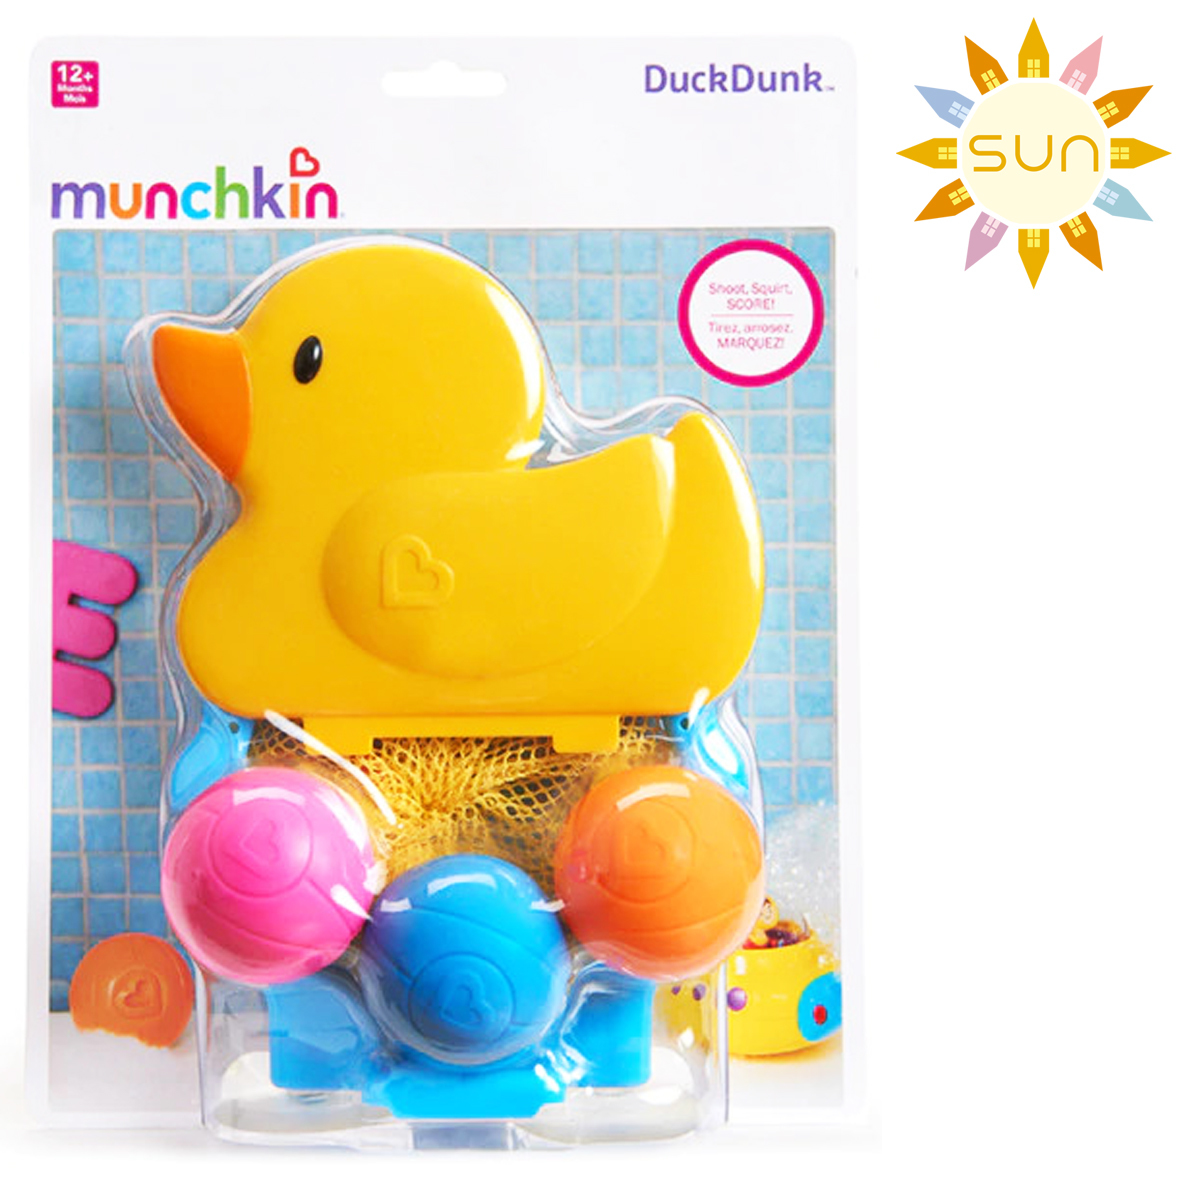 munchkin bath toys